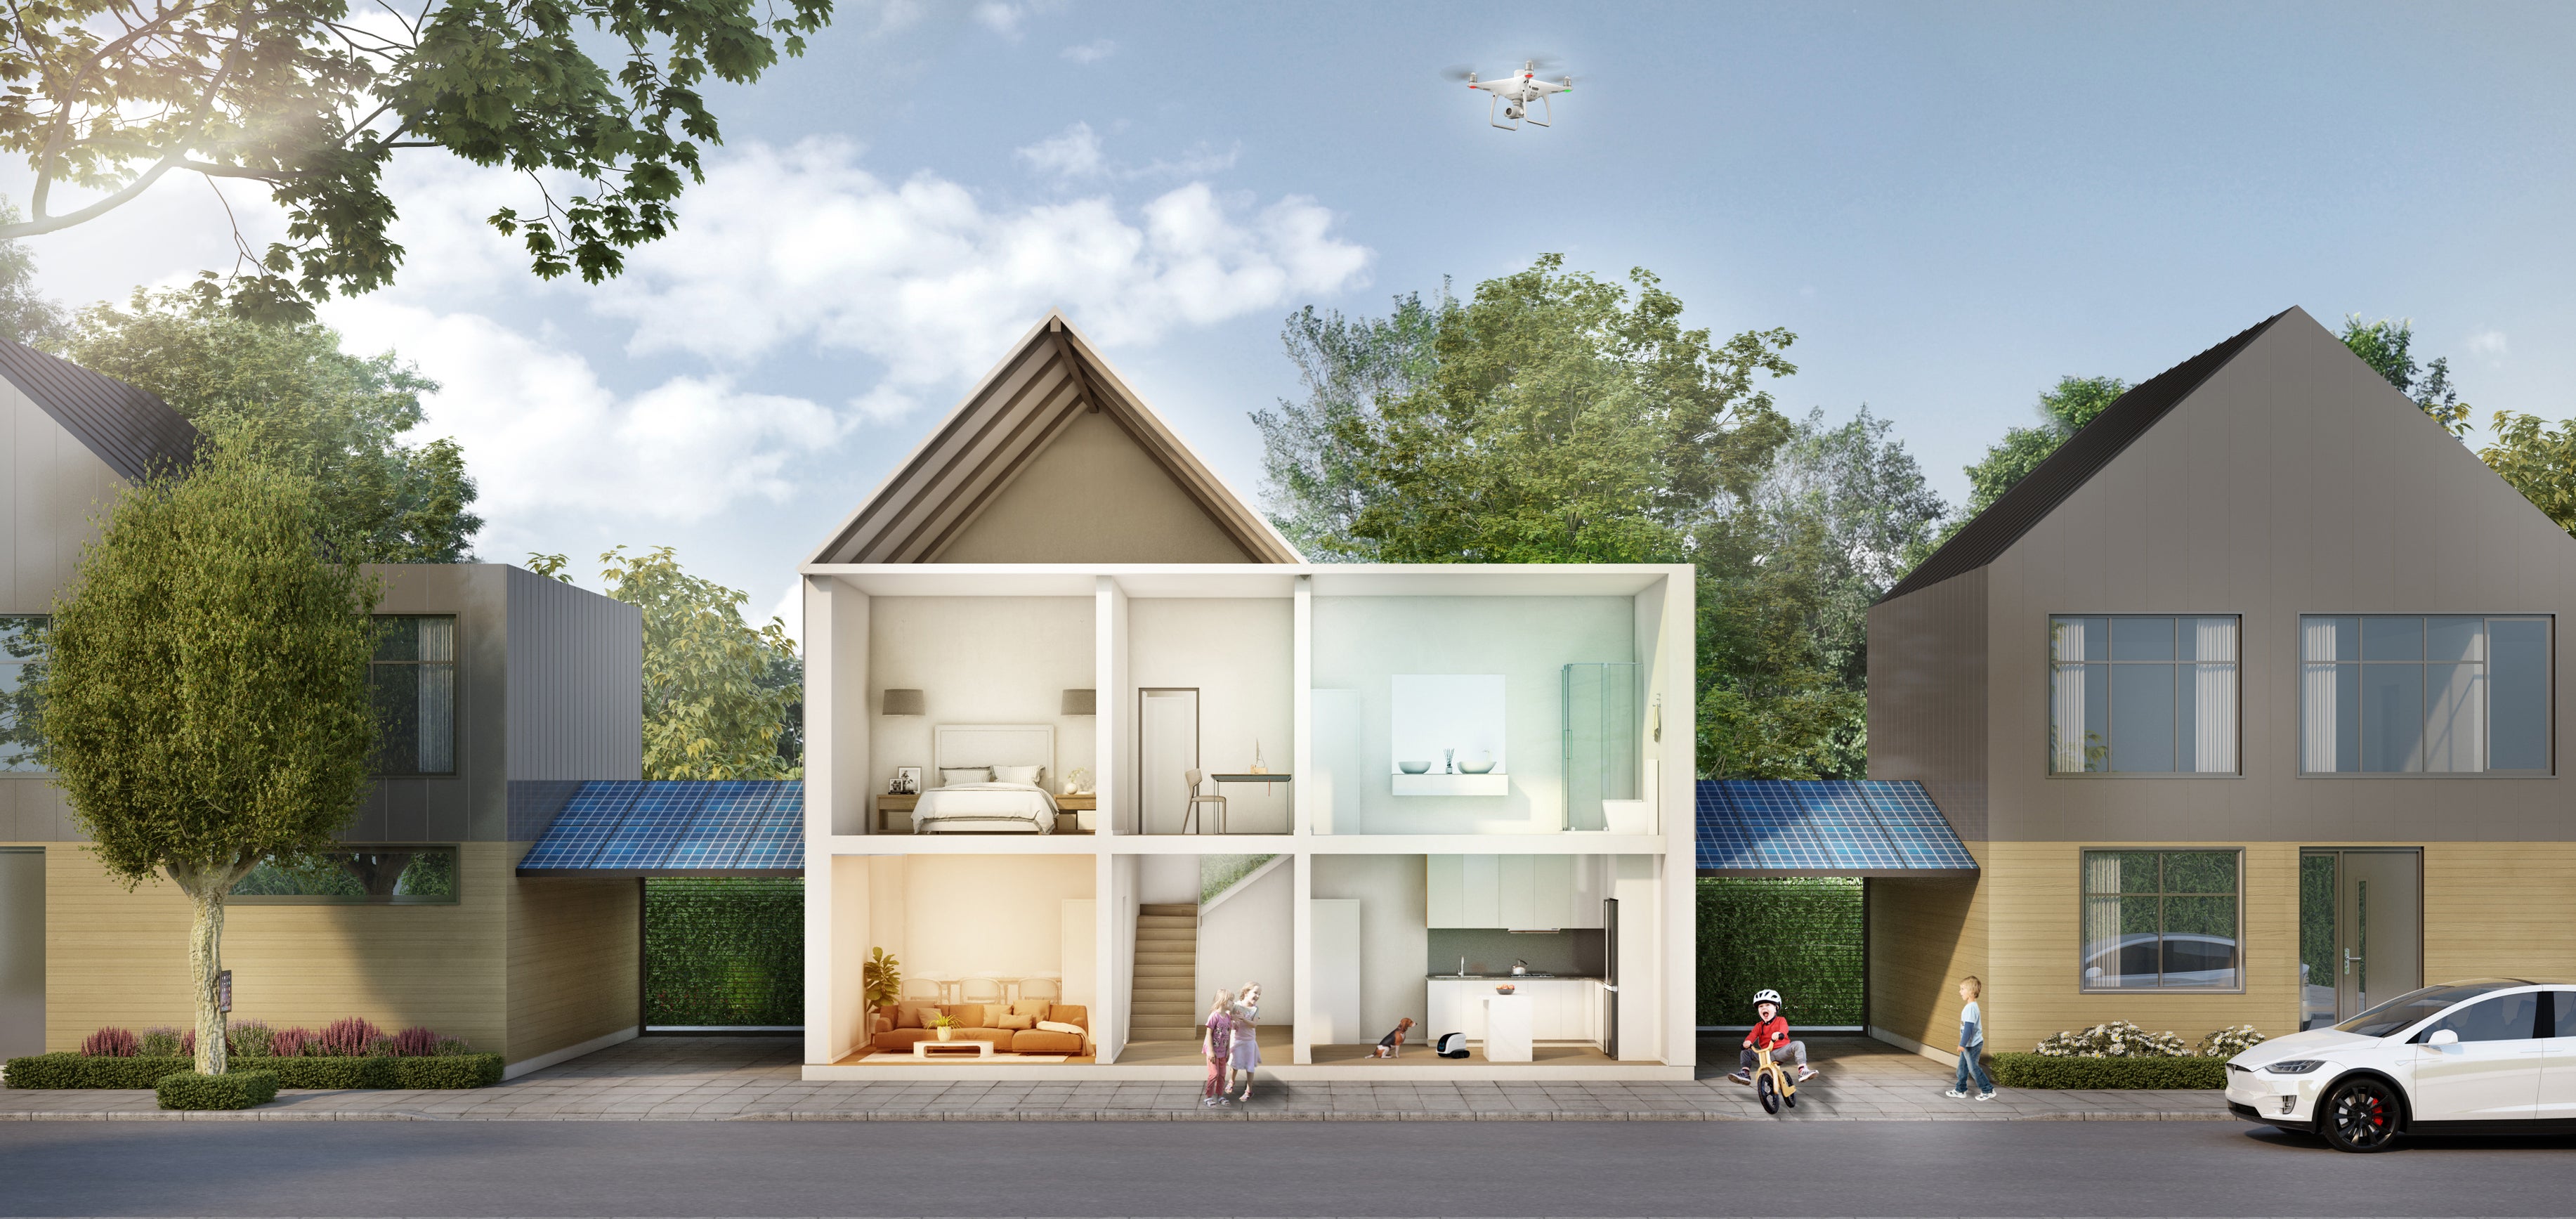 Future home illustration